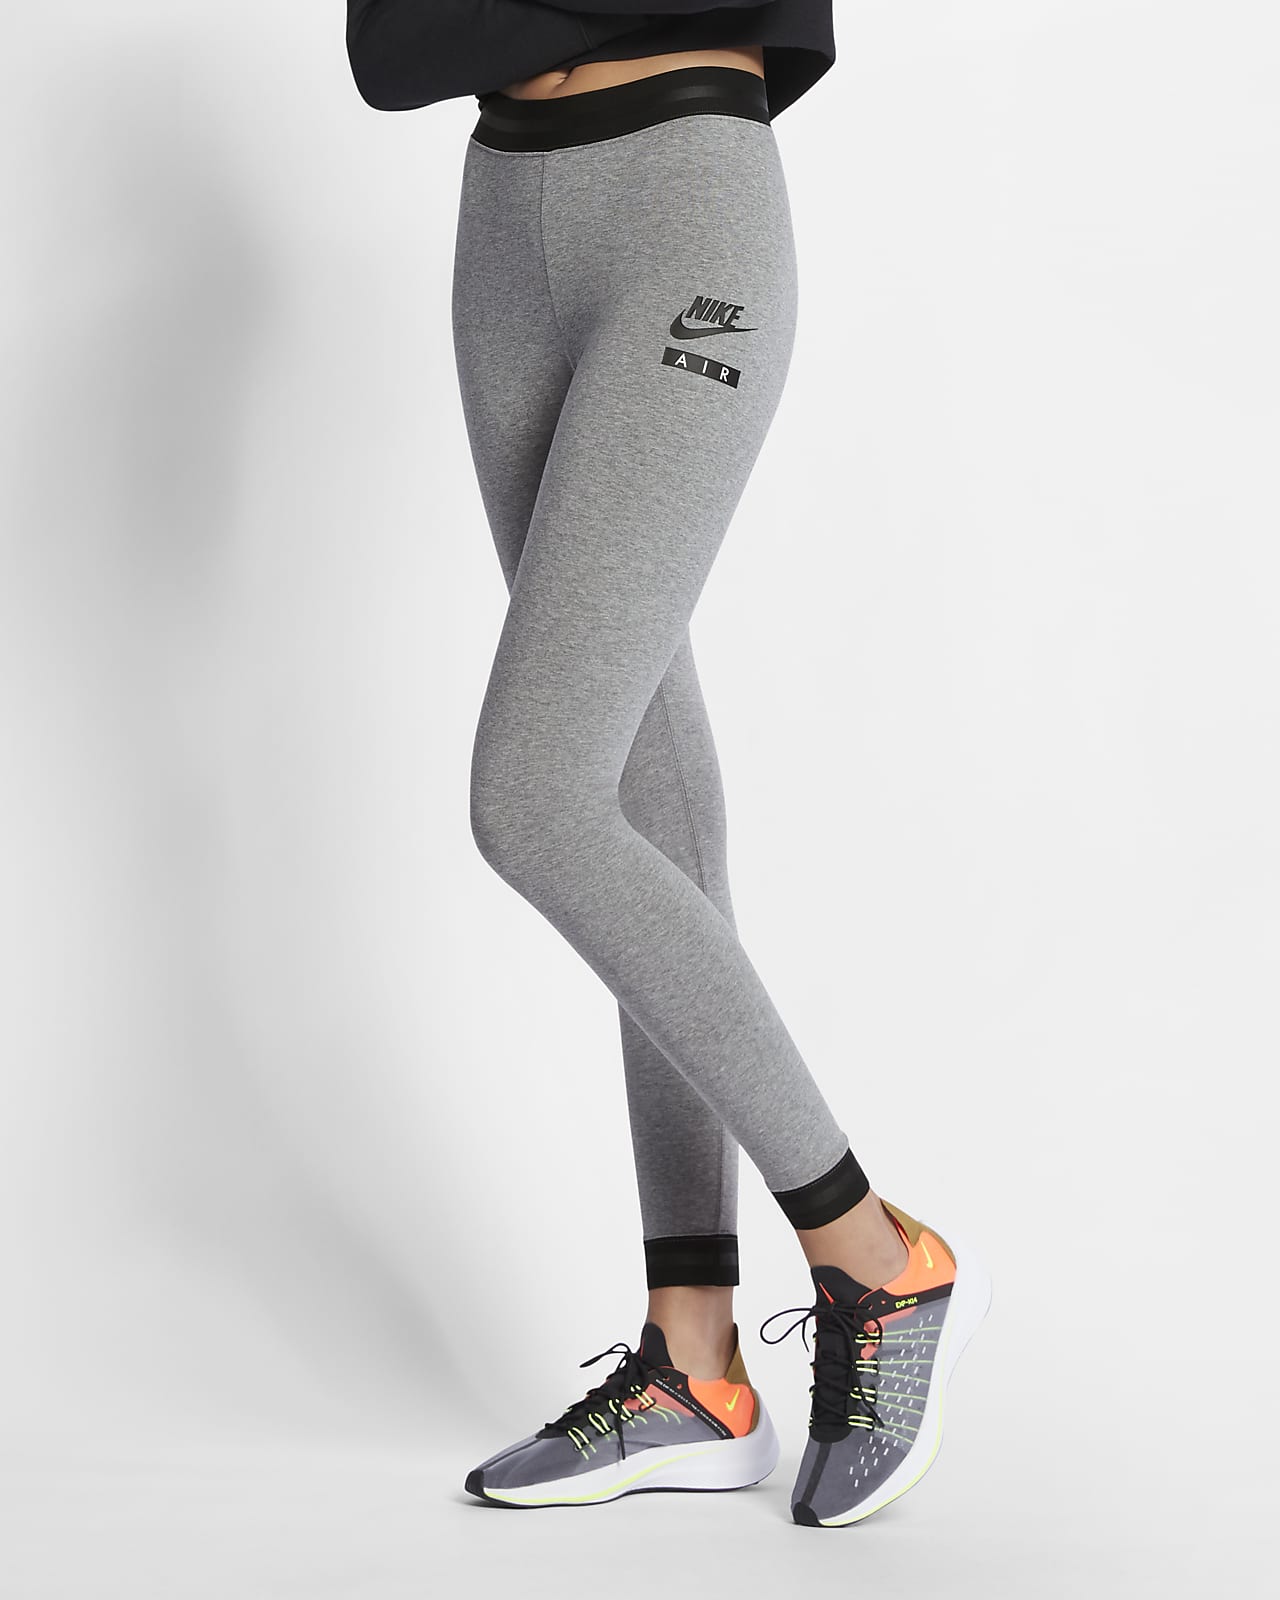 Damen Grau Yoga Bekleidung. Nike CH